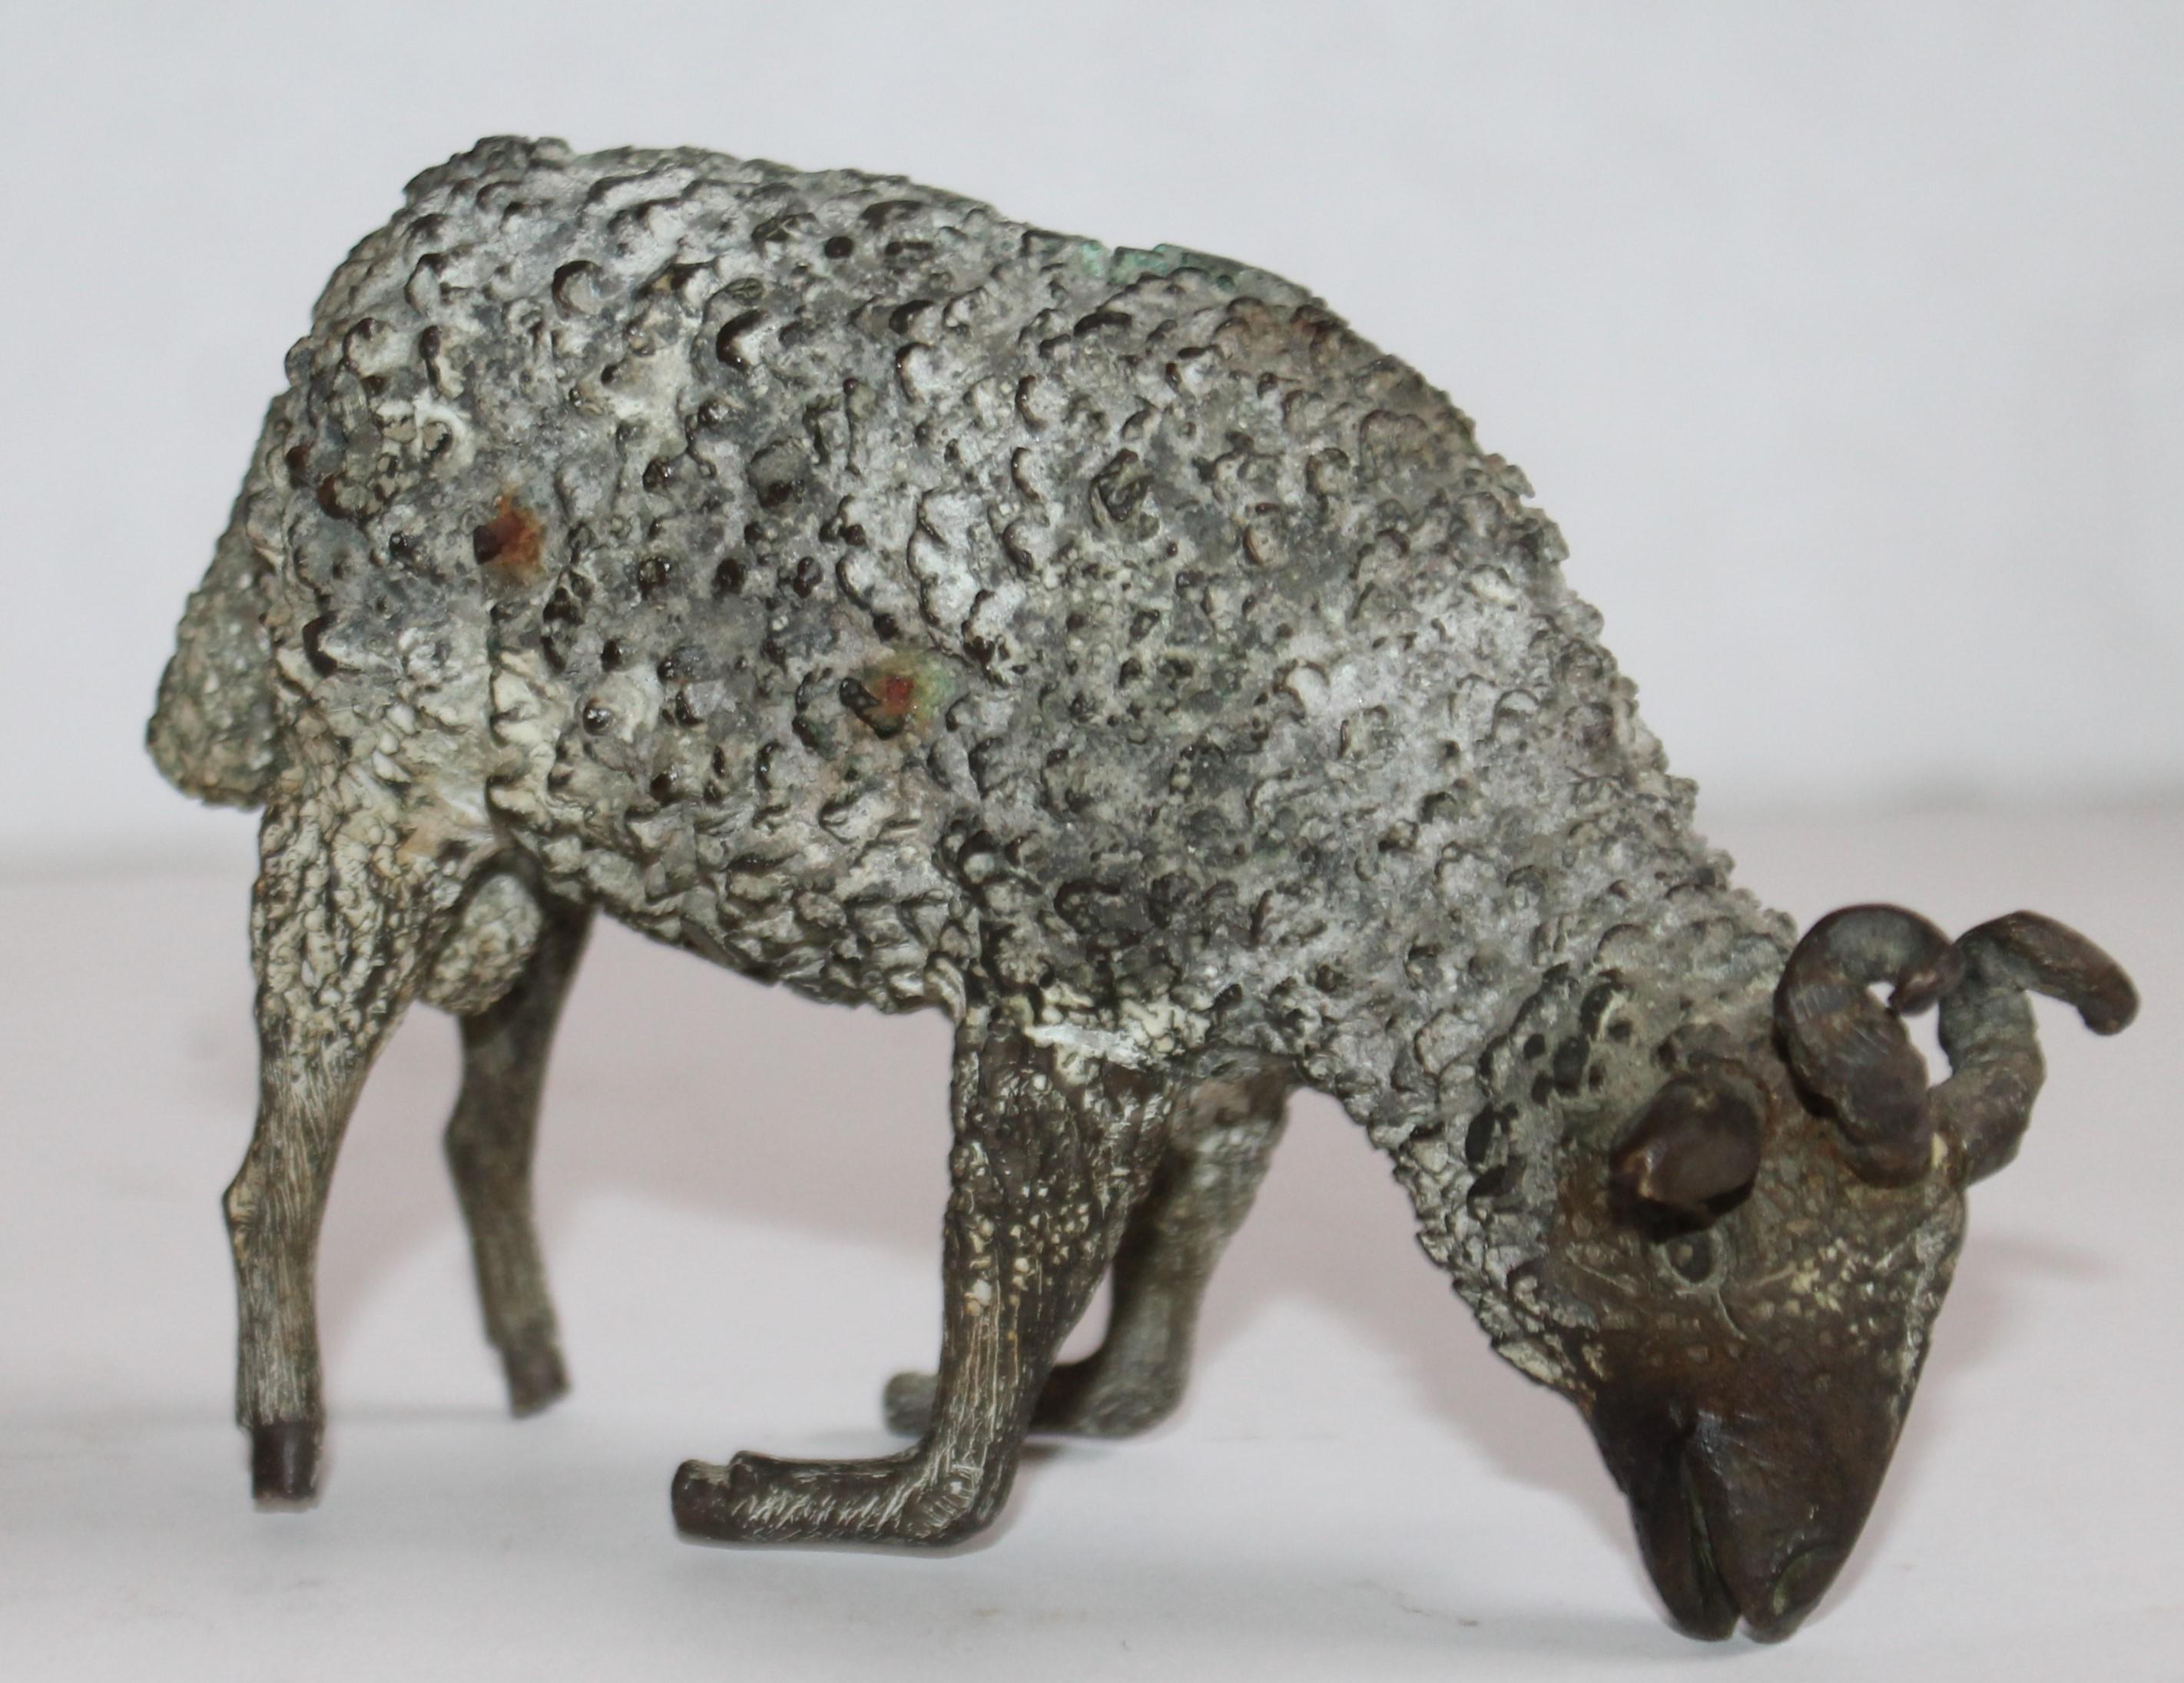 19th century handmade bronze sheep sculpture. No signature or makers mark.